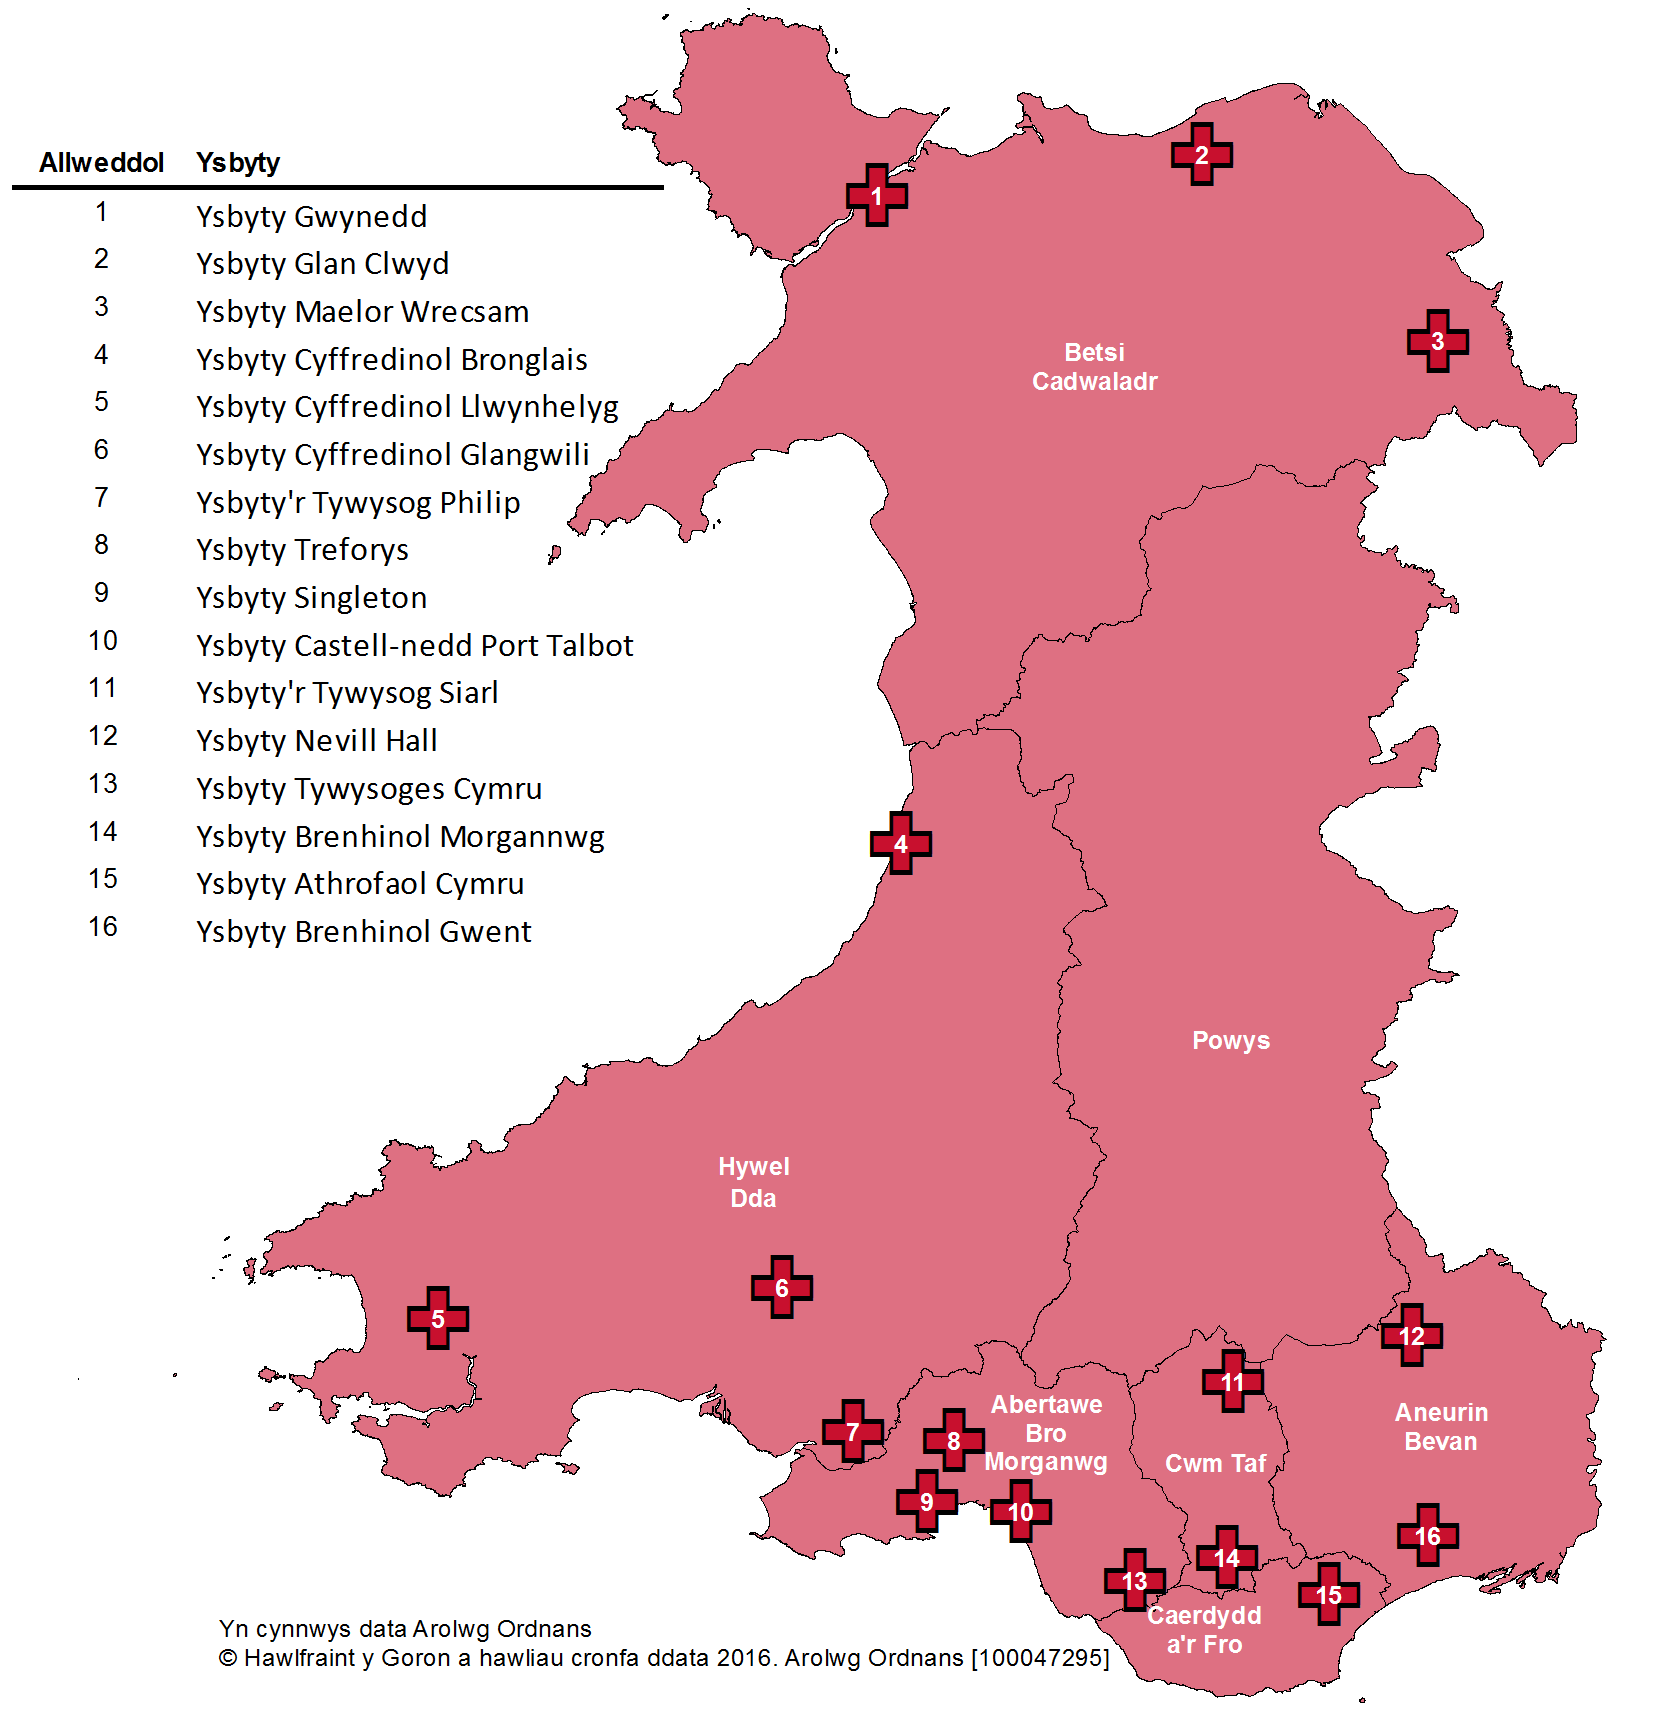 Hospital in Wales - Welsh